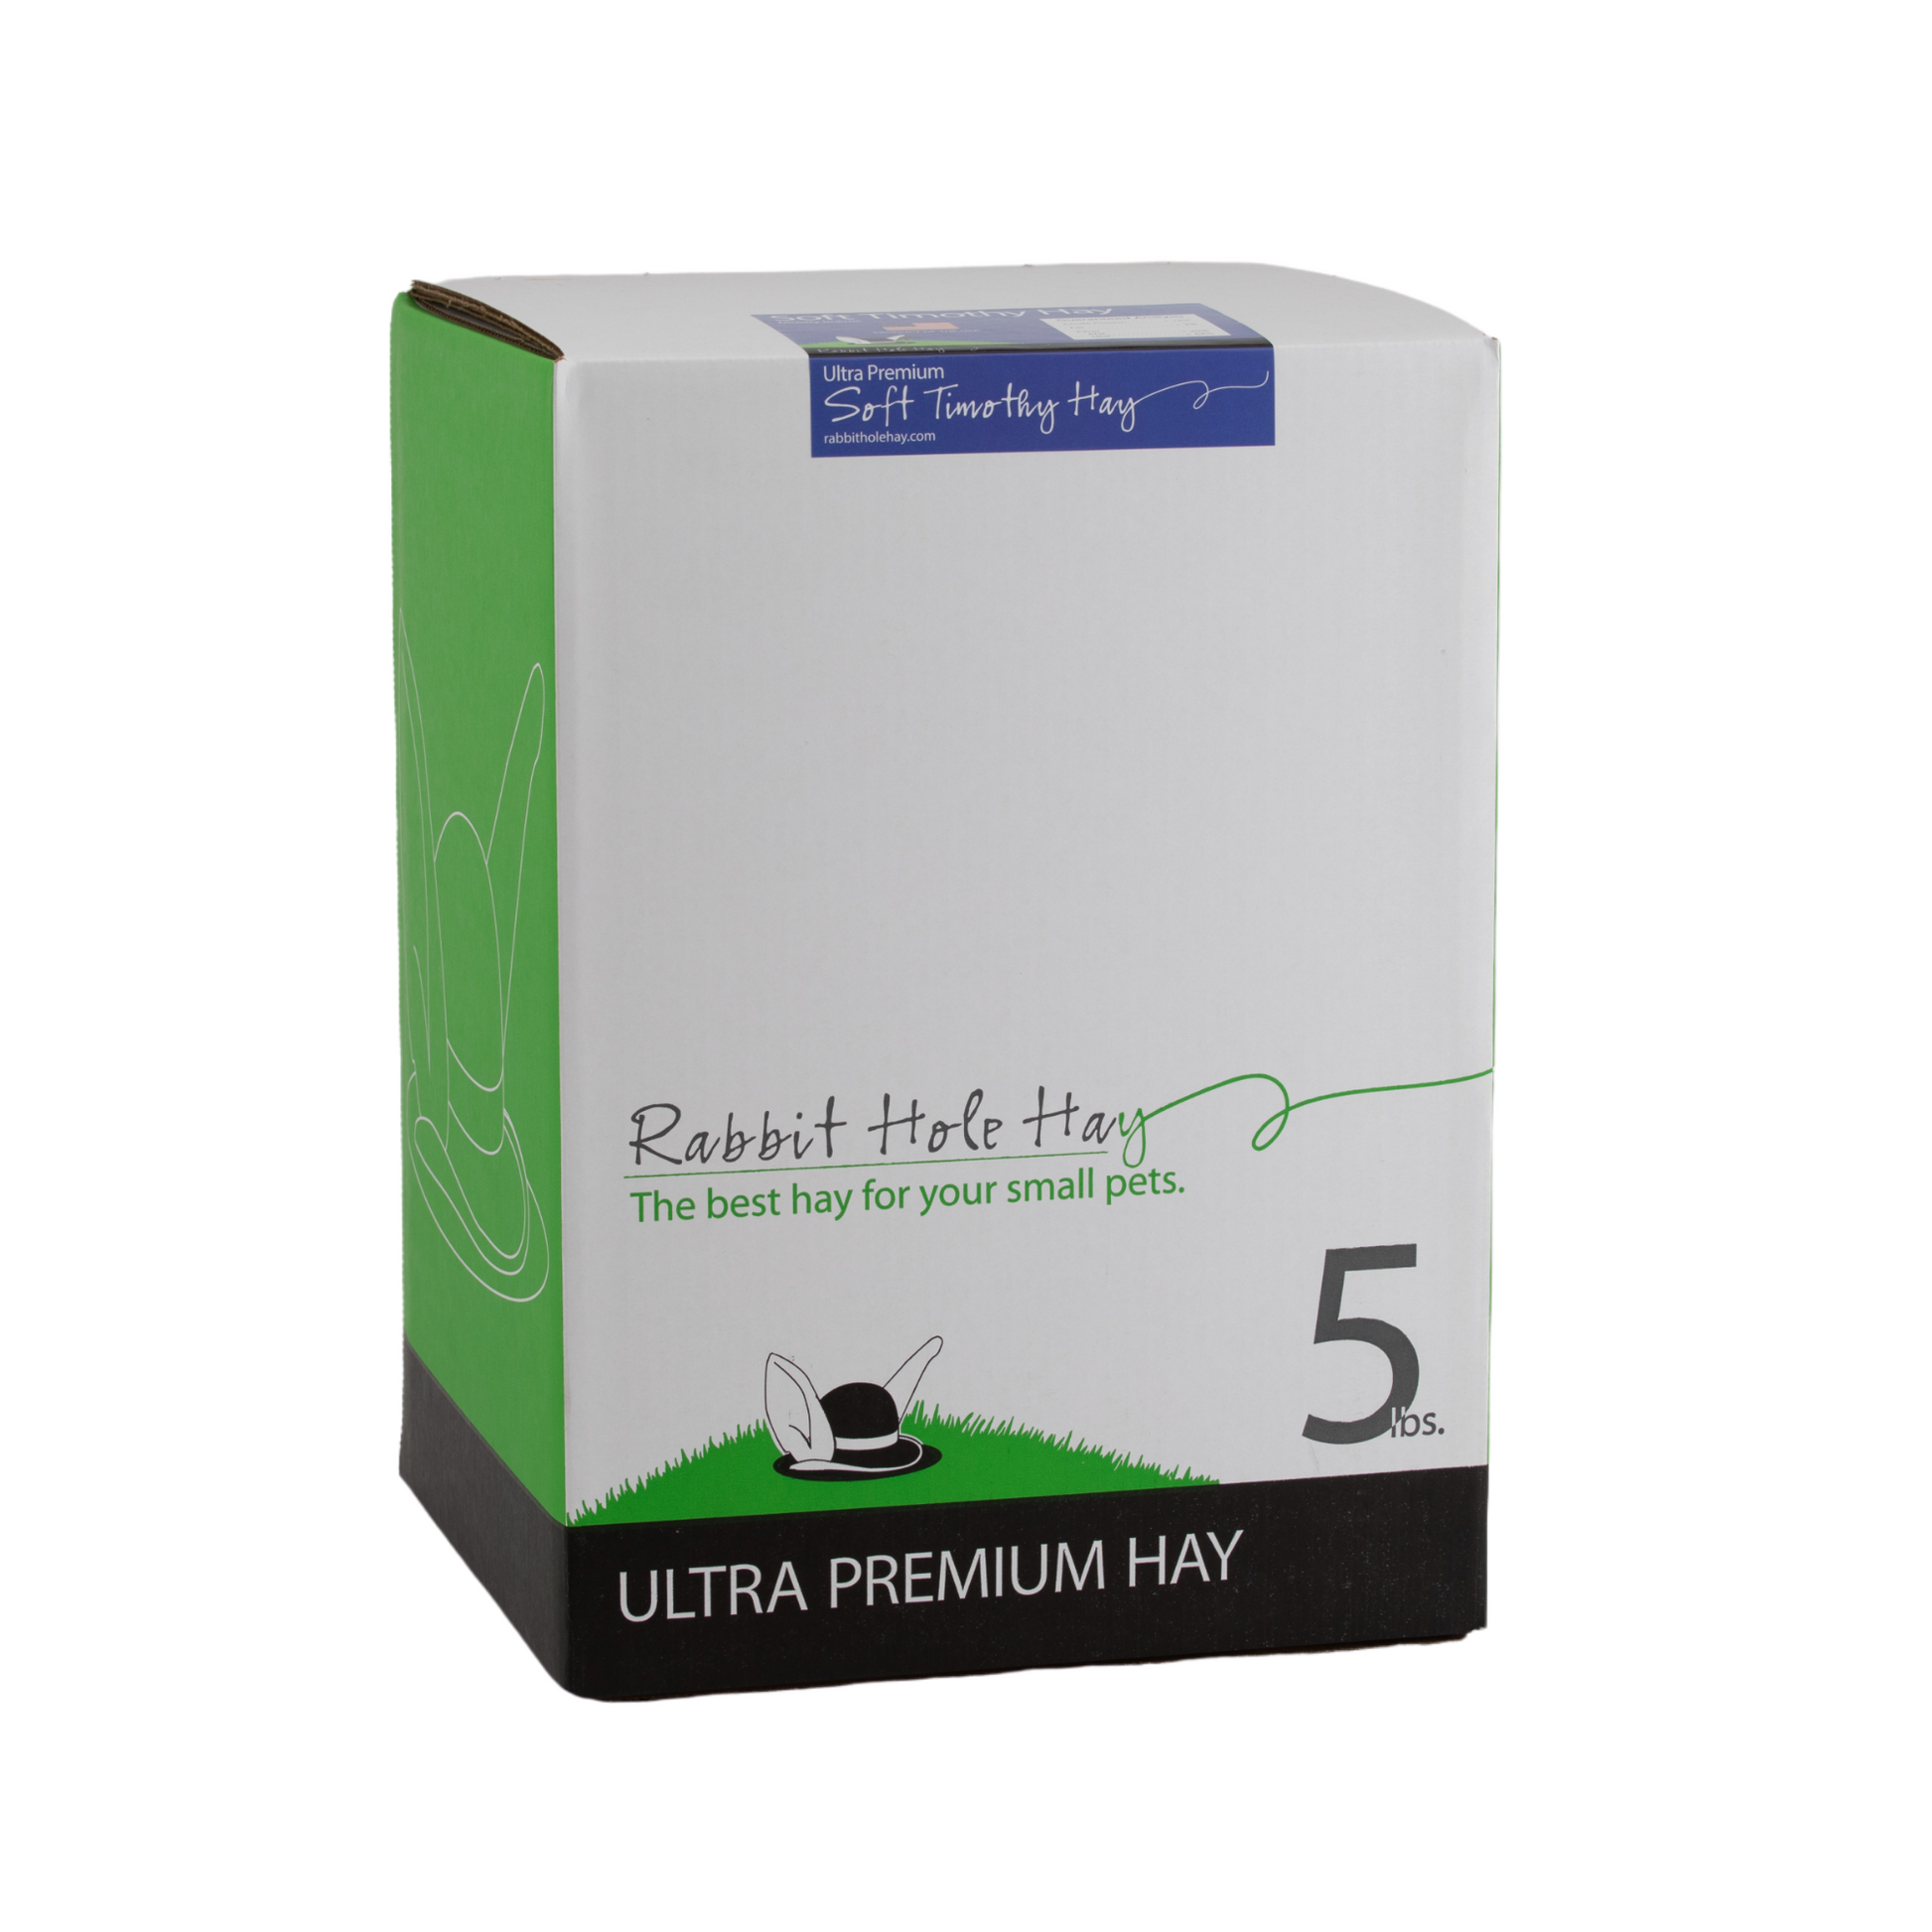 Ultra Premium Soft Timothy Hay - 5lbs